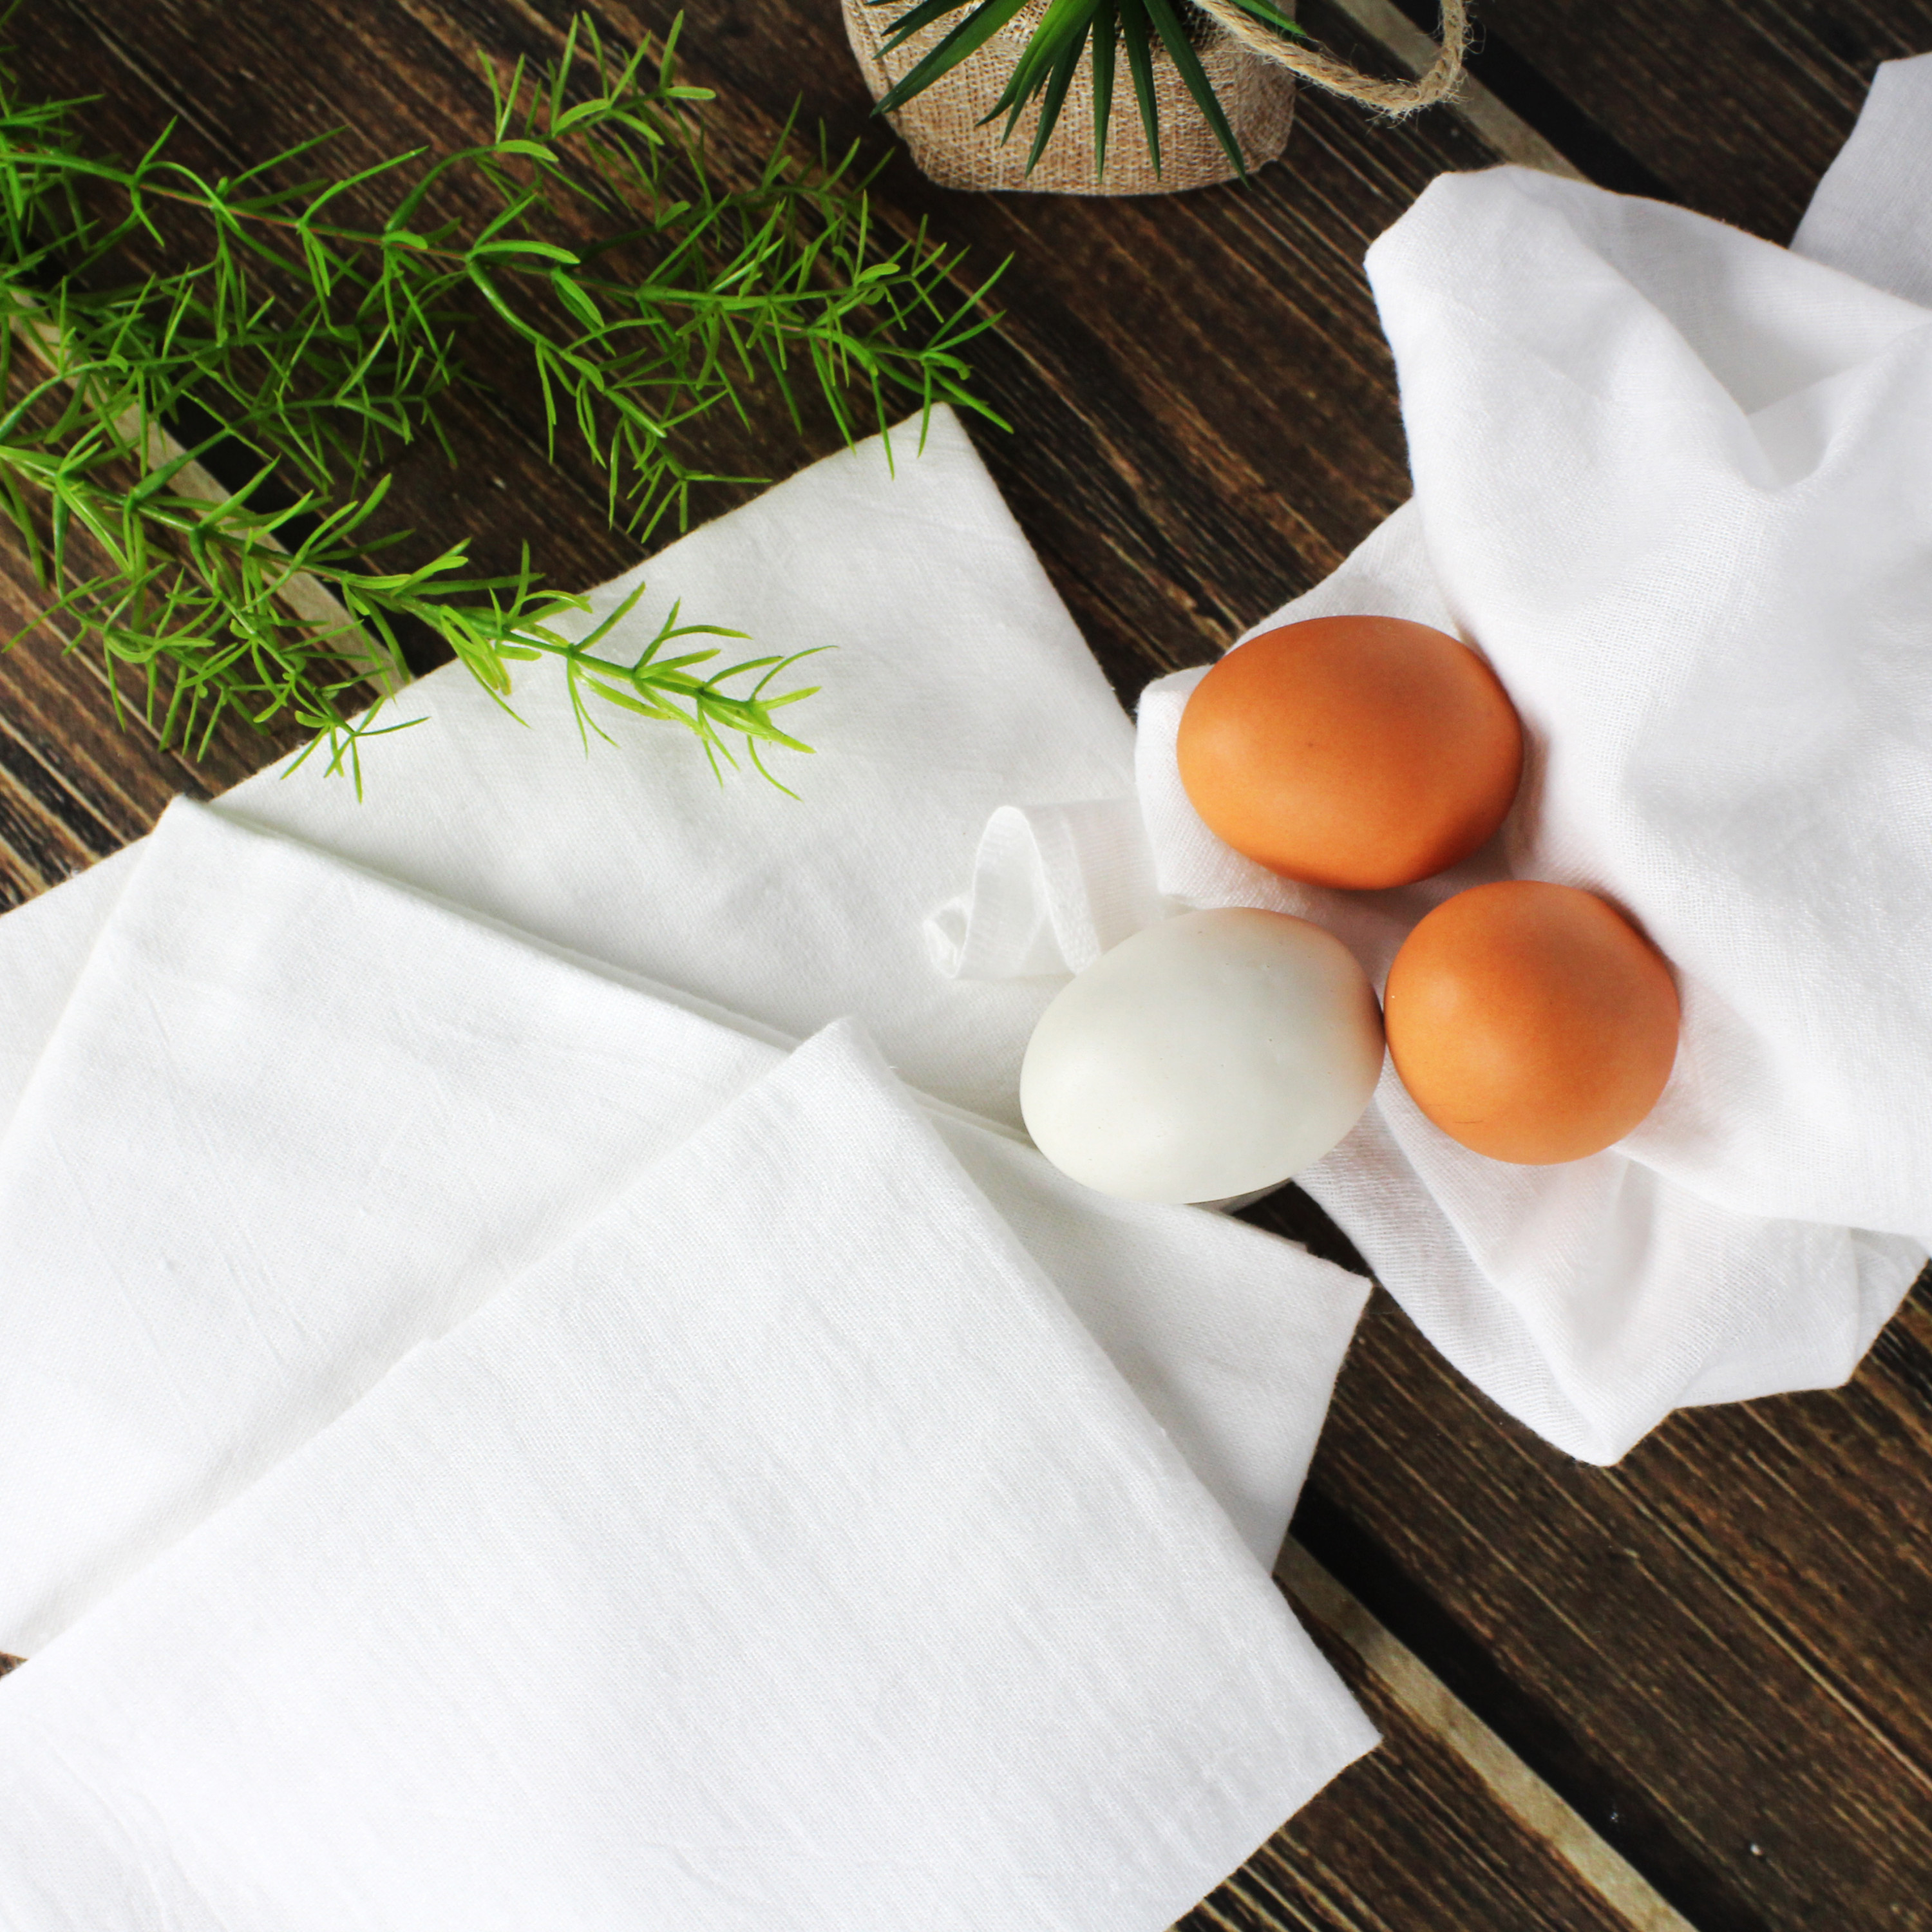 Mainstays 10-Piece Flour Sack Kitchen Towel Set, White - image 3 of 12